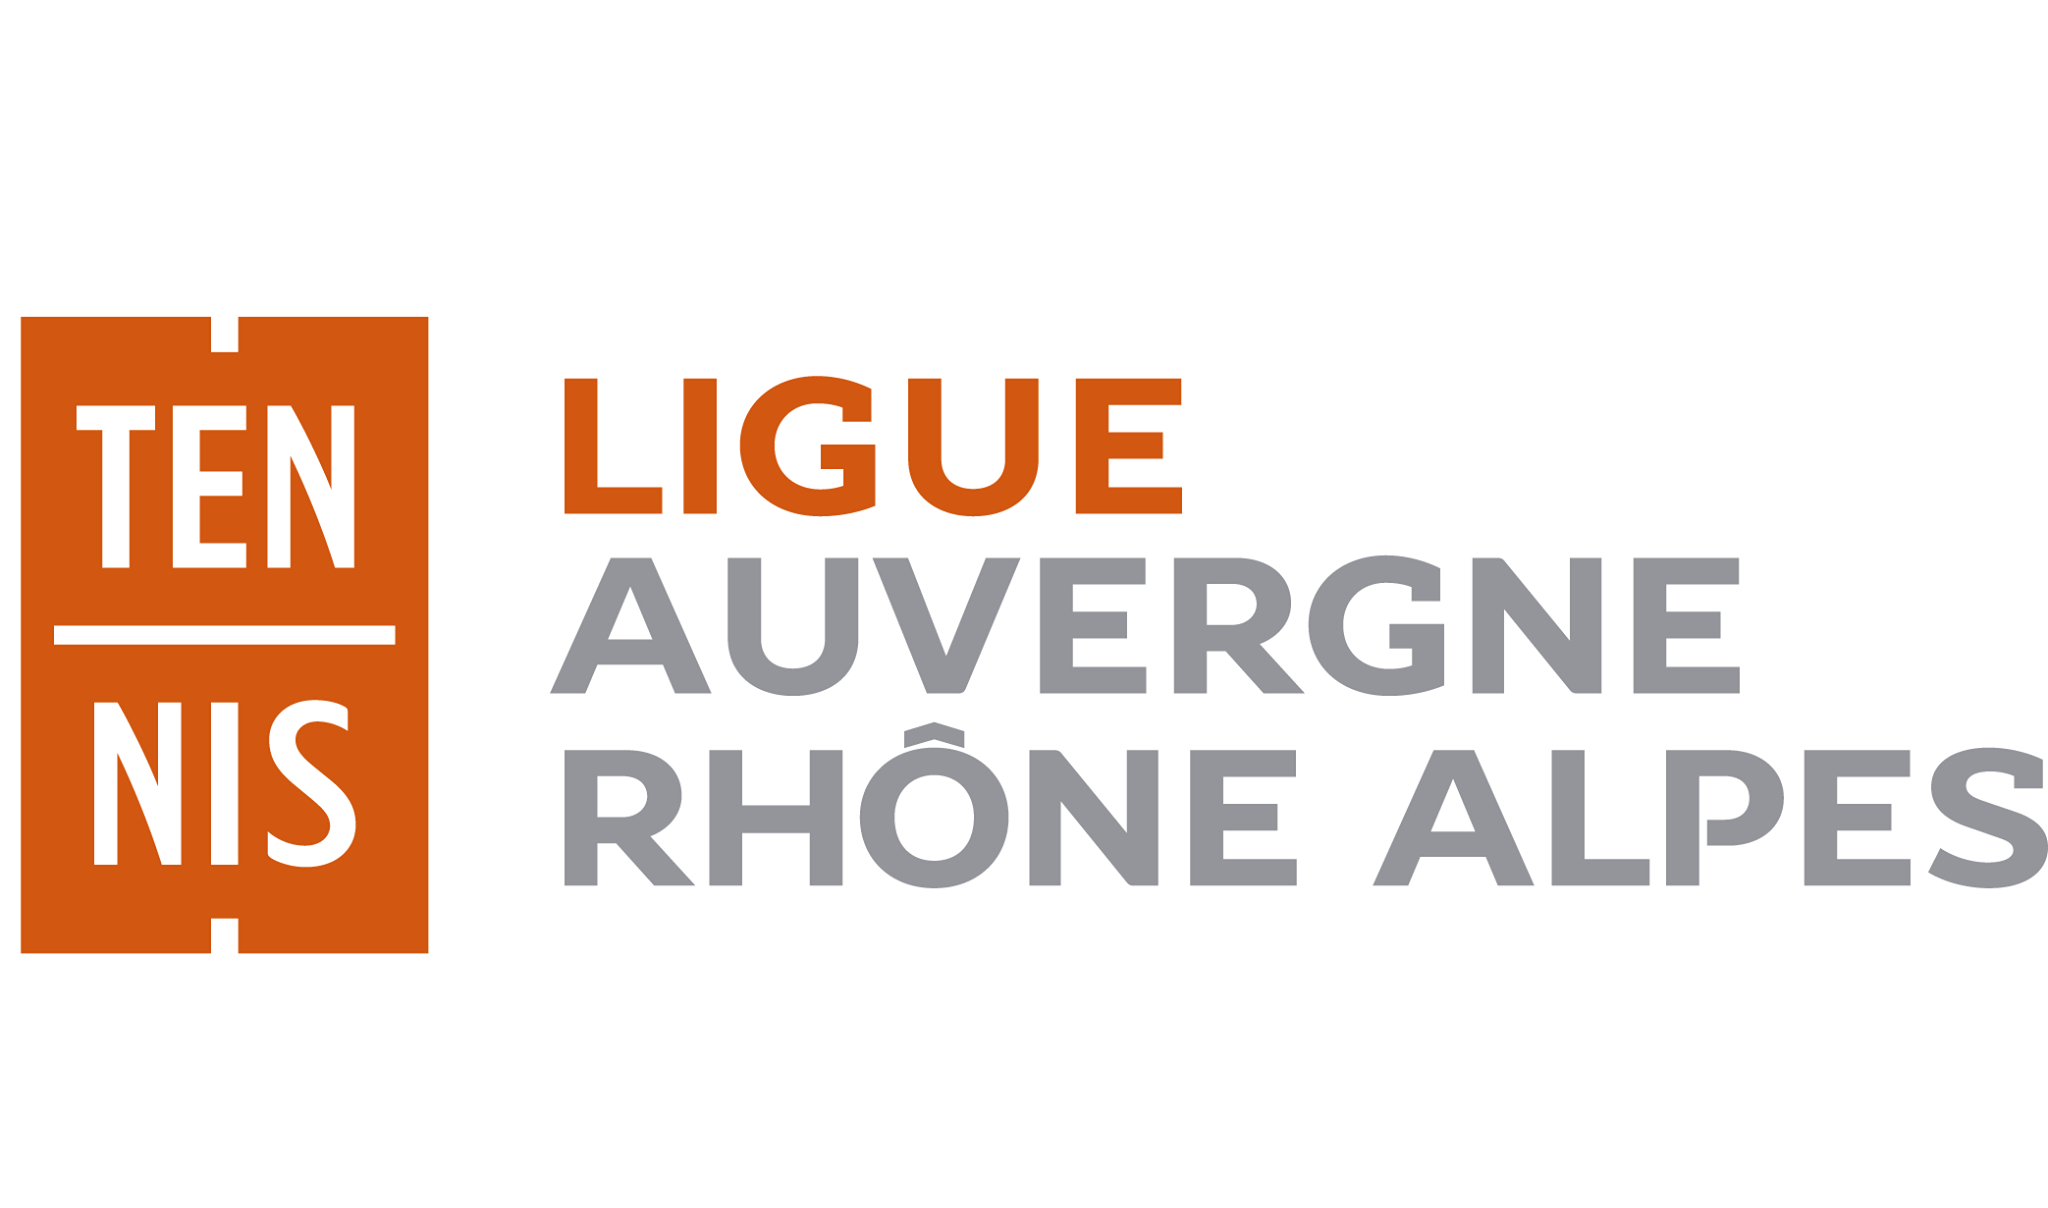 Auvergne-Rhône-Alpes 联赛正在招募中！